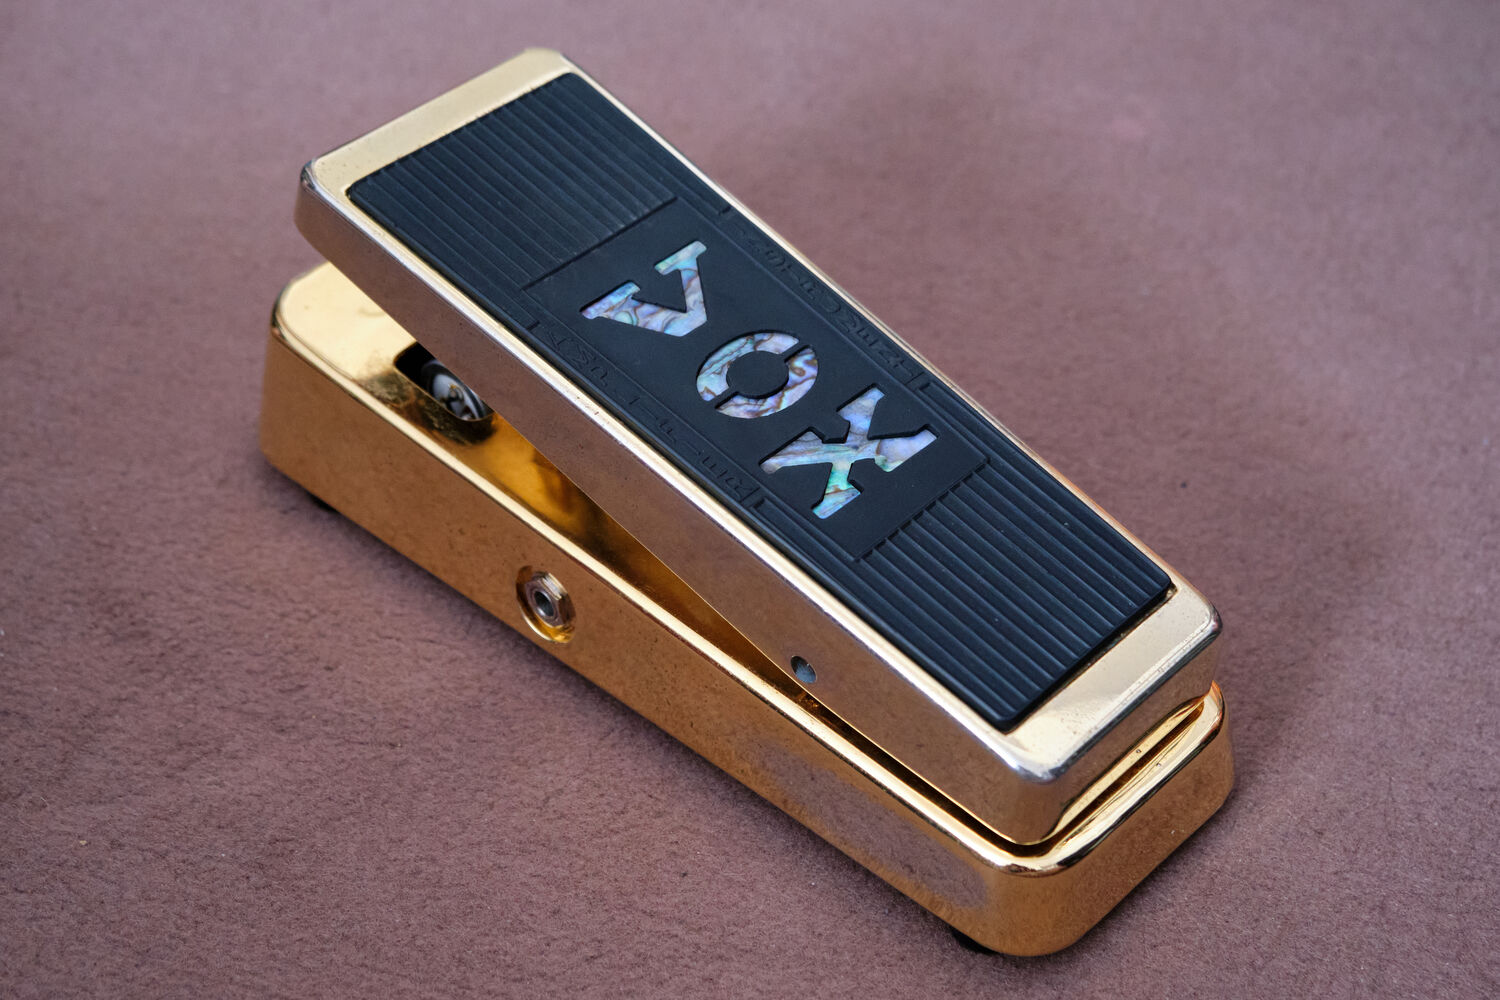 Vox V847GA Gold Avalon Limited Edition rare d'occasion - Zikinf